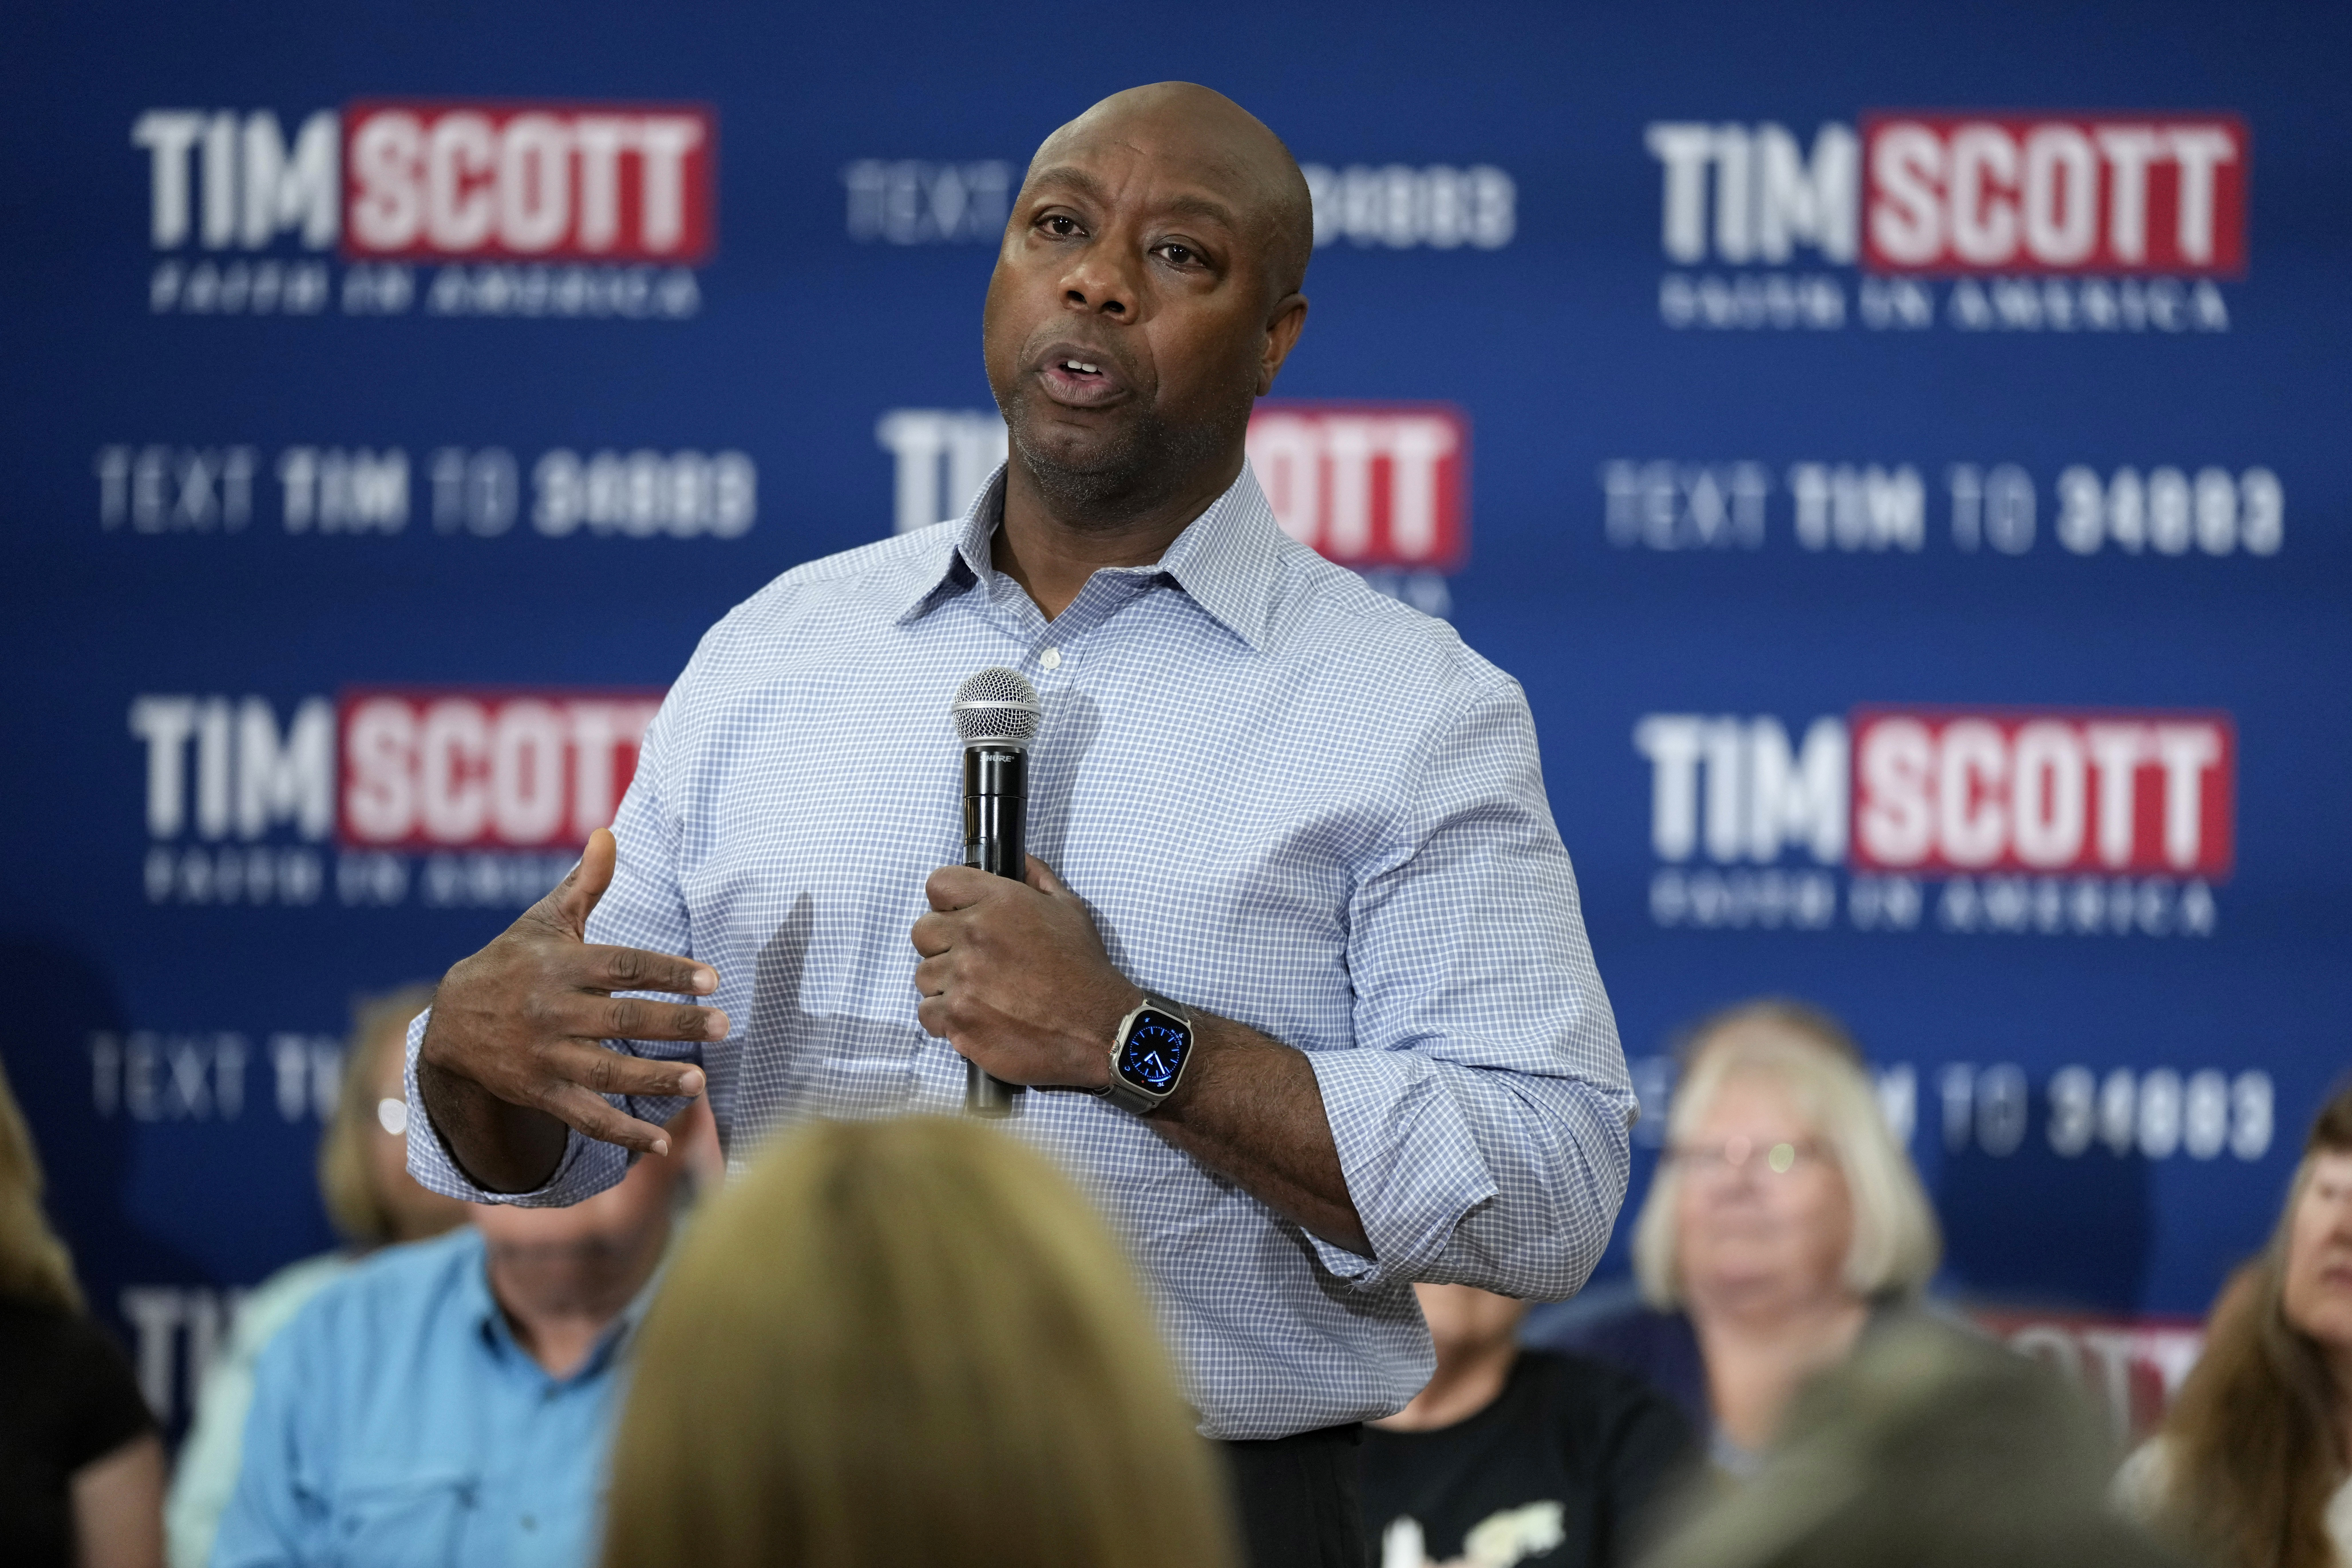 Tim Scott is the top Black Republican in the GOP presidential